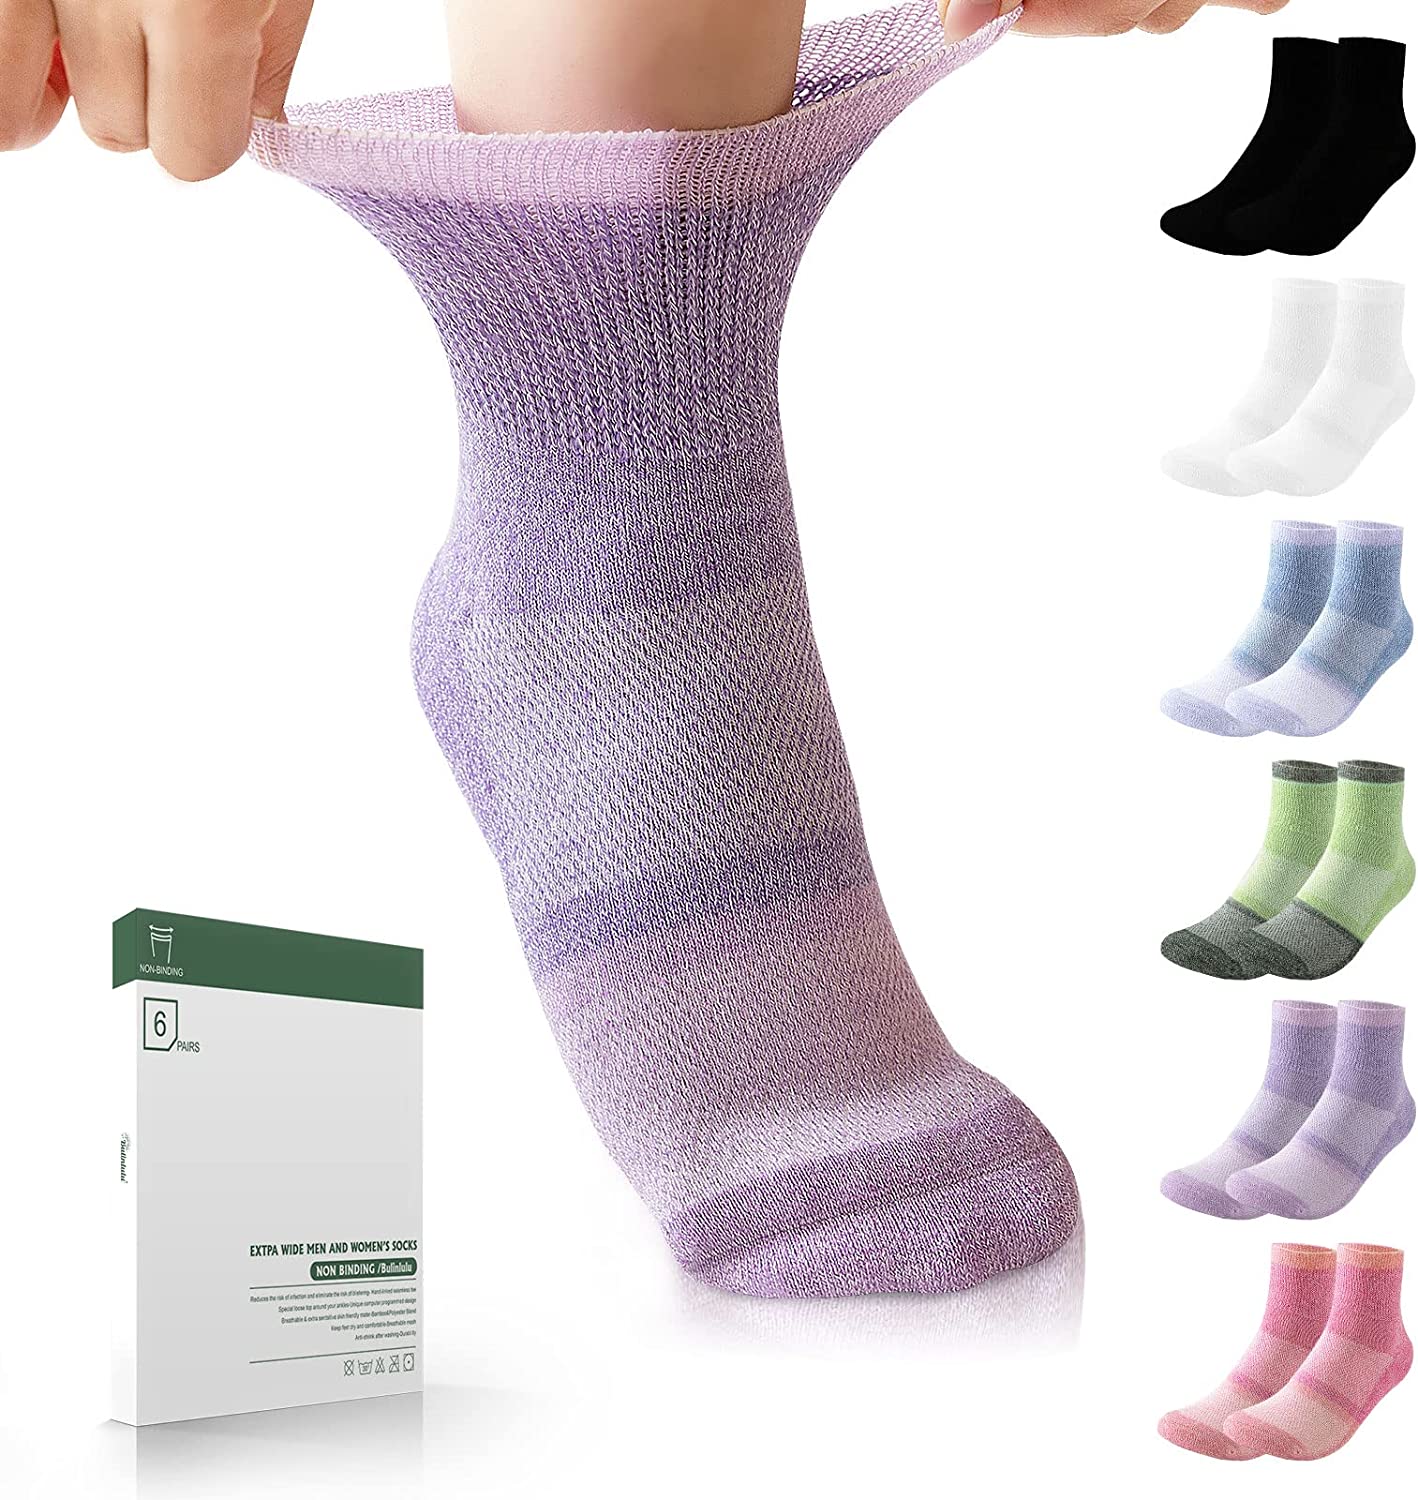 Bulinlulu Diabetic Socks Women&Men-6 Pairs Bamboo Non Binding Diabetic Ankle Socks,Extra Wide Socks Stretchy Loose Top Socks with Seamless Toe (Medium,Bright Clashing Colours)